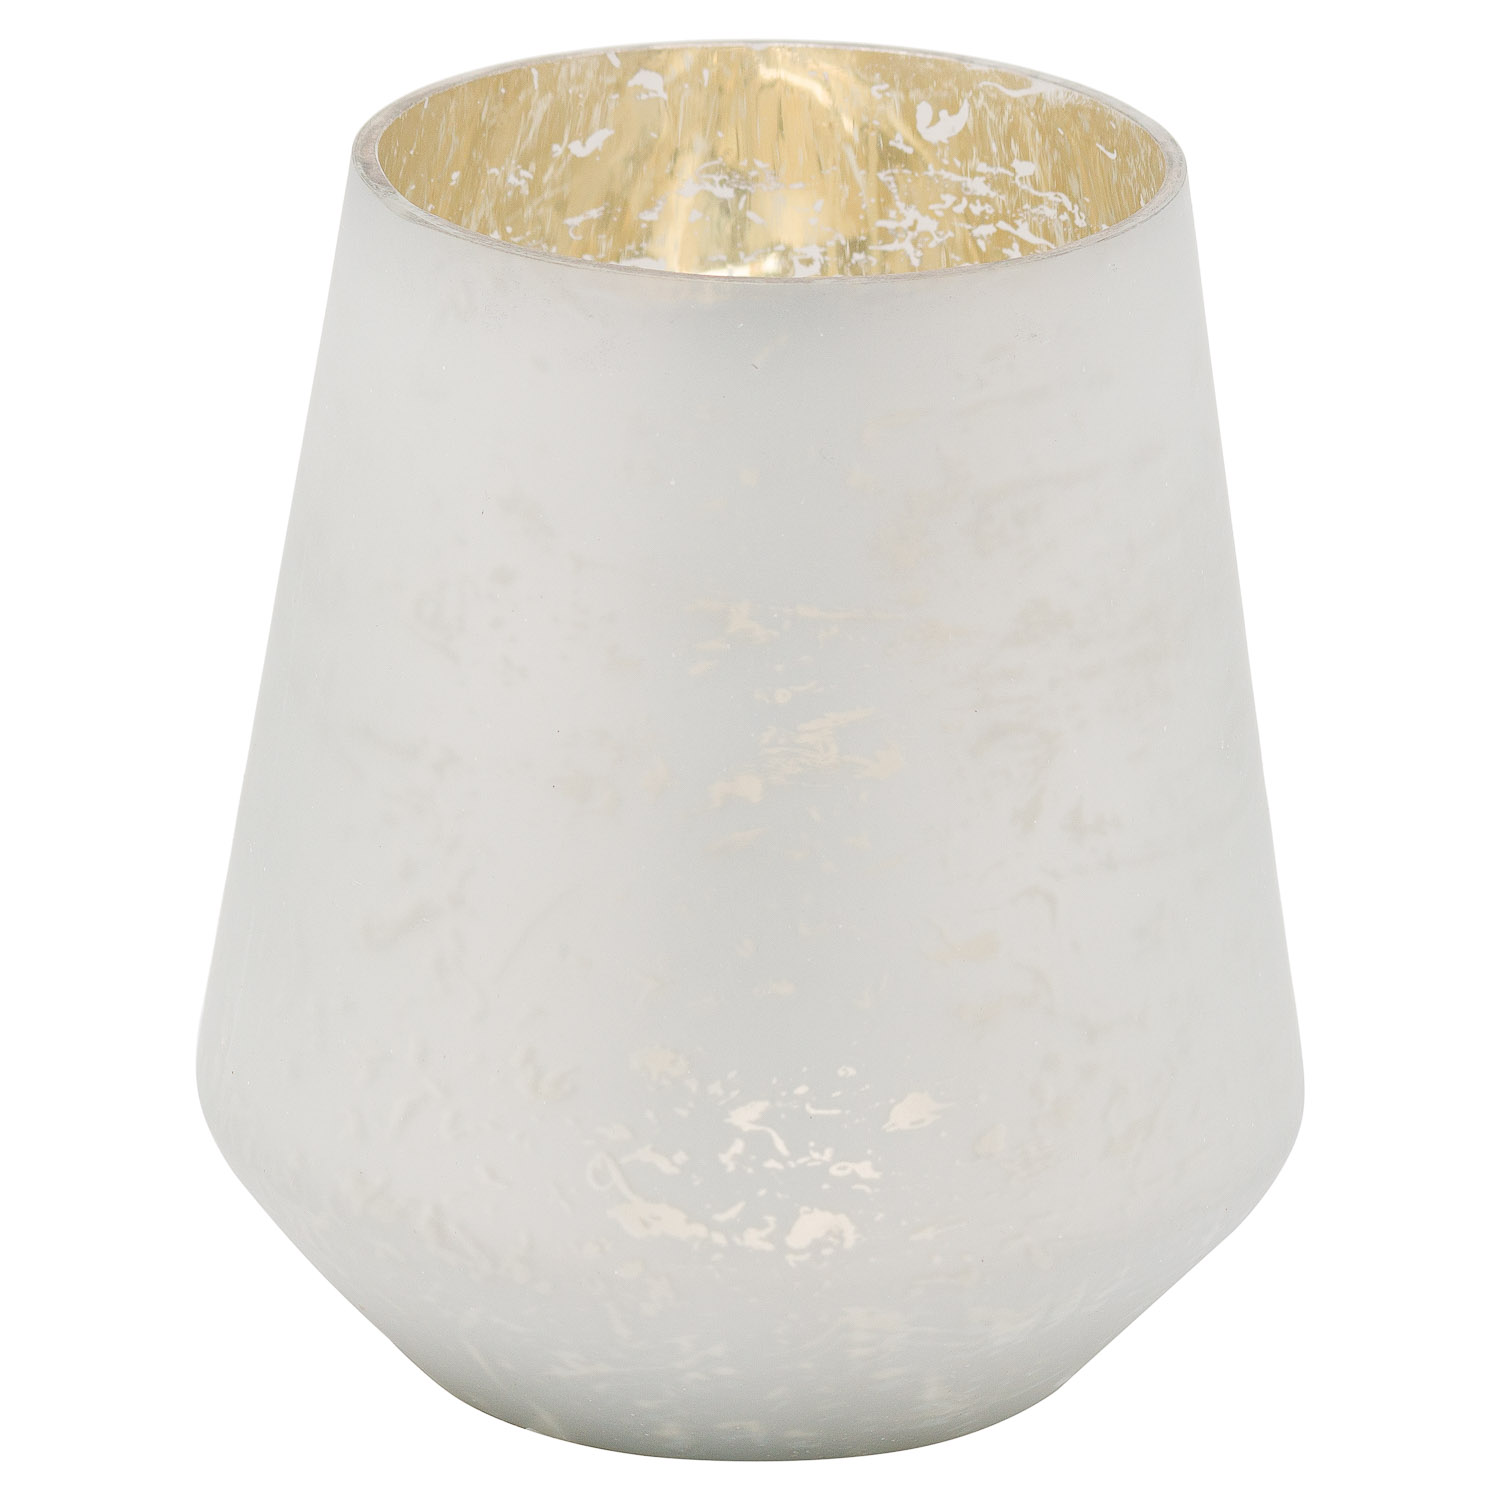 The Noel Collection large White Decorative Vase - Image 1